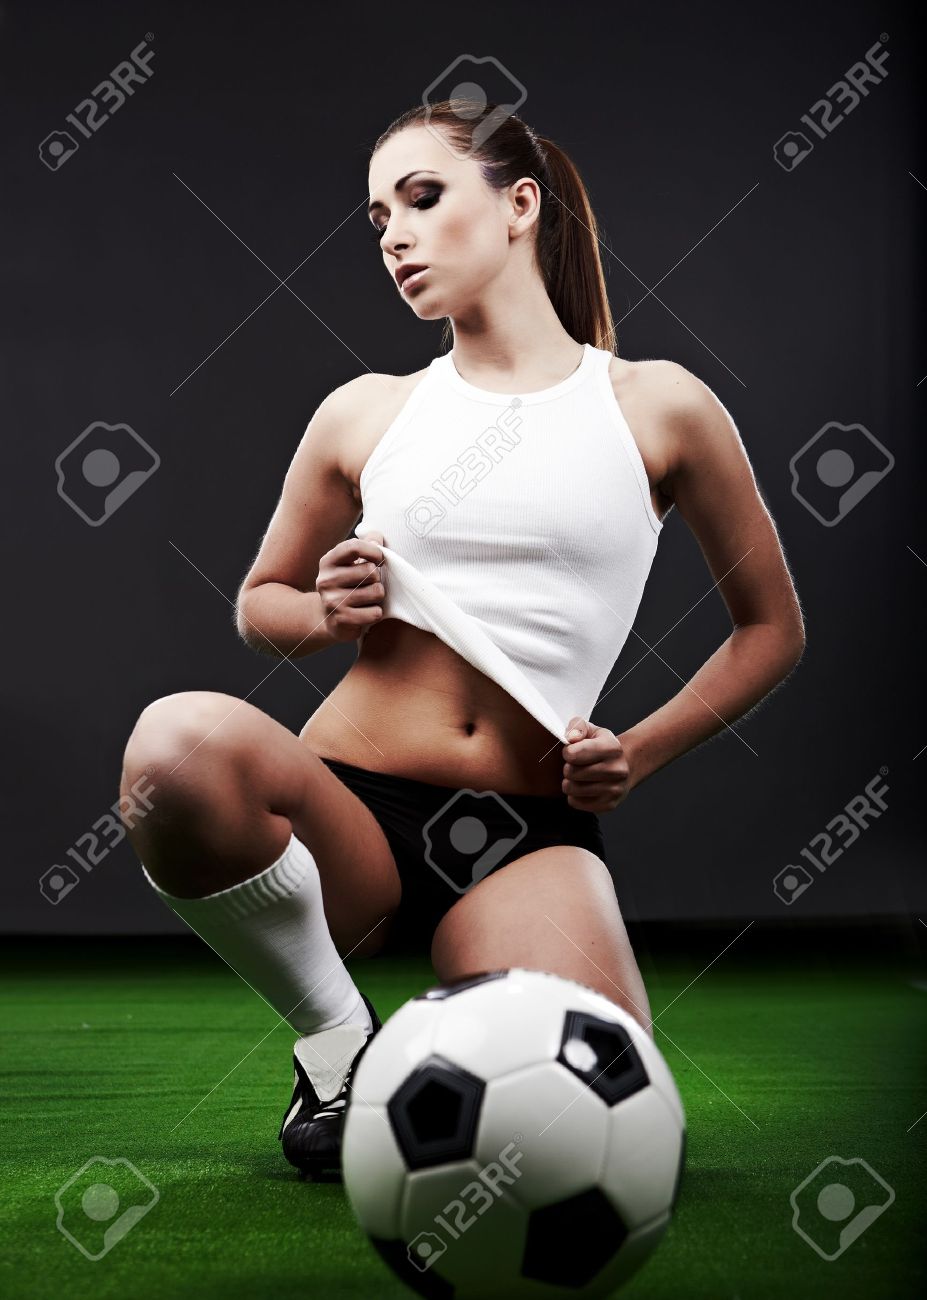 chloe nairn add photo sexy girls playing football